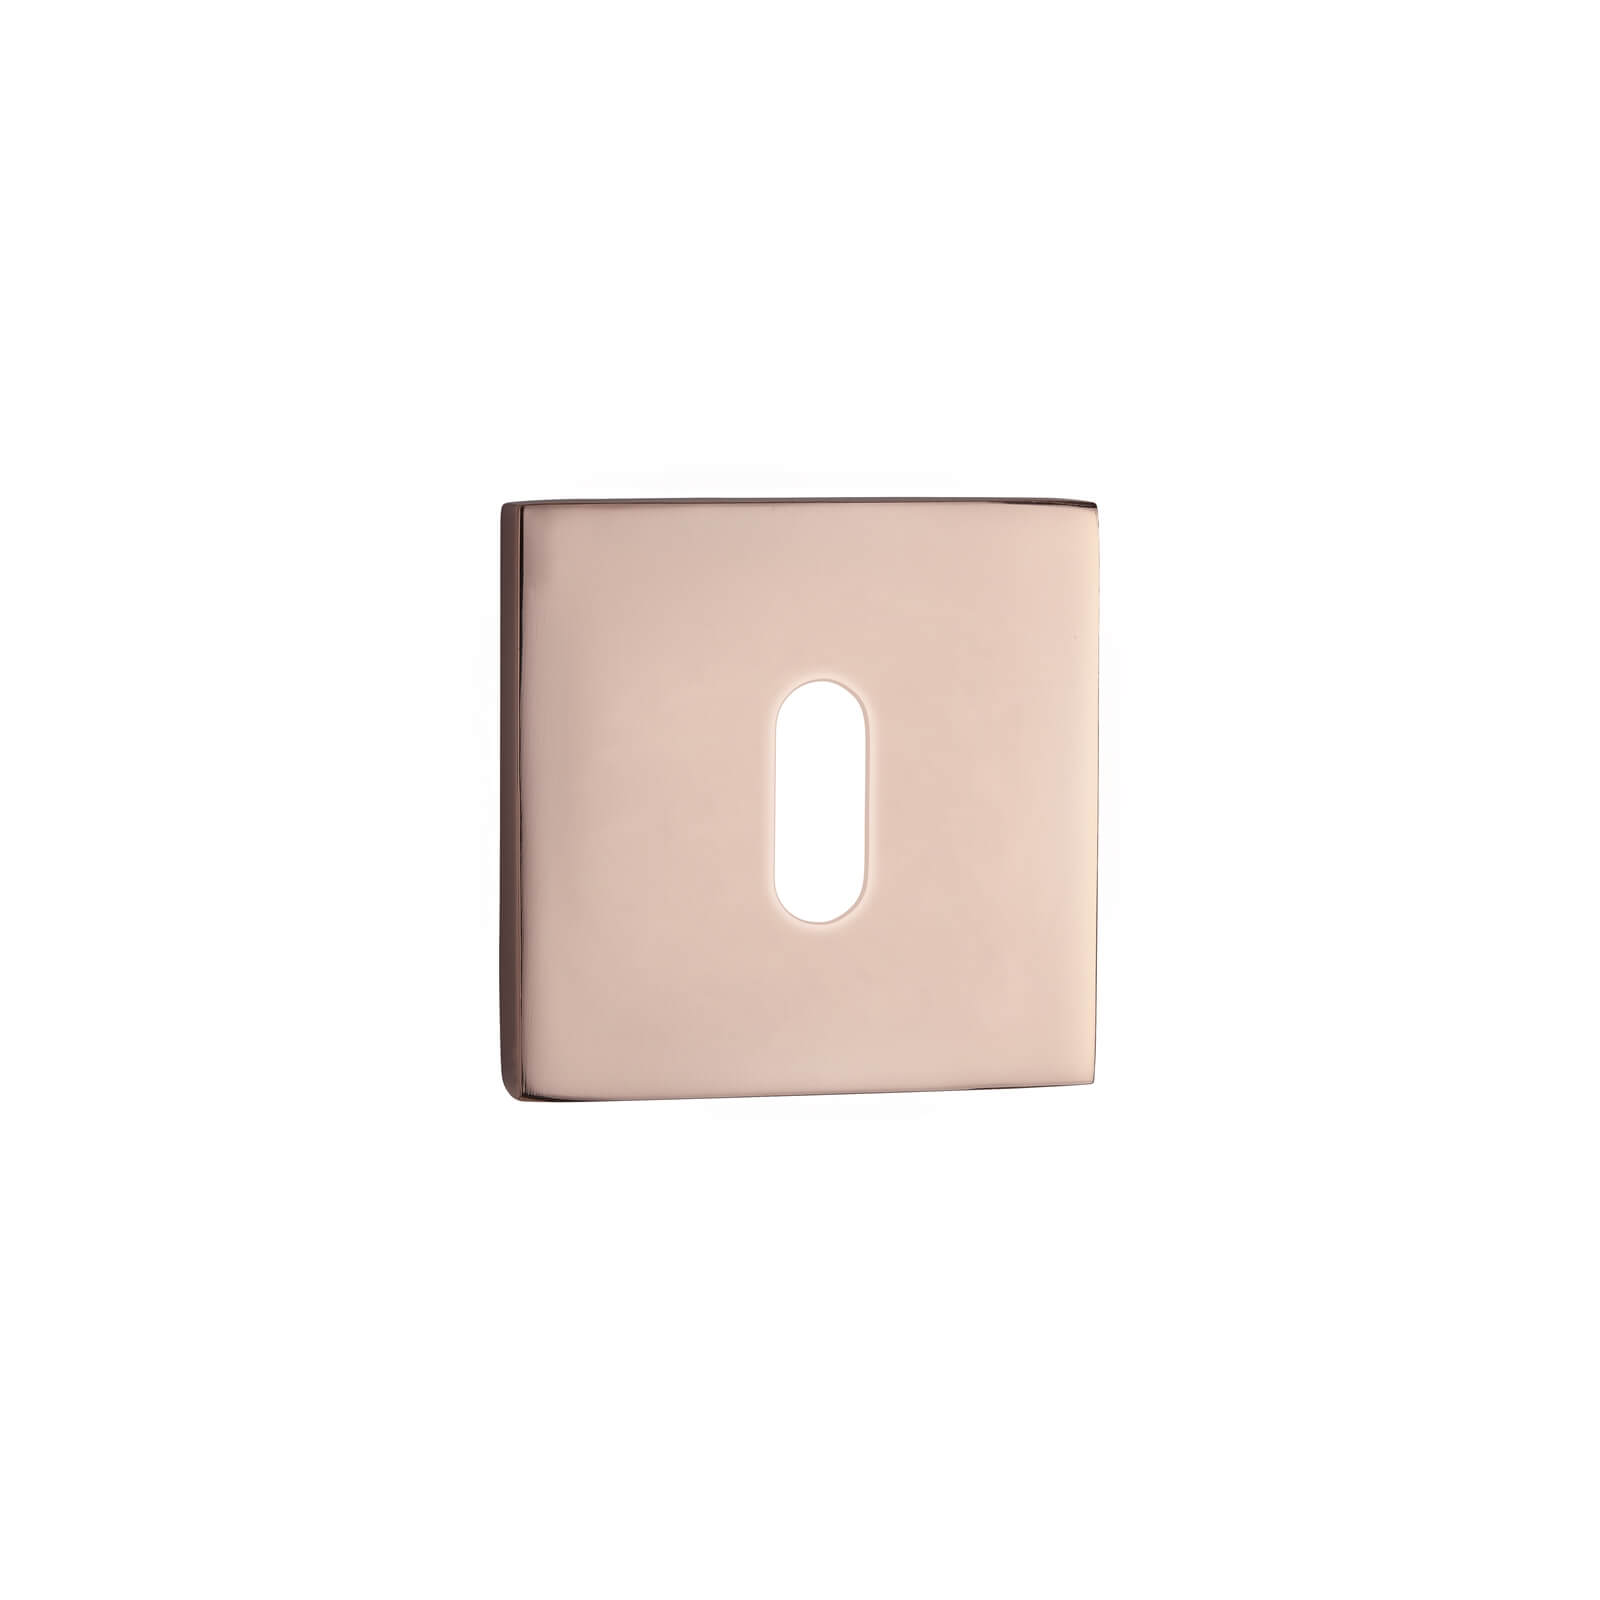 Sandleford Square Keyhole Escutcheon - Polished Copper